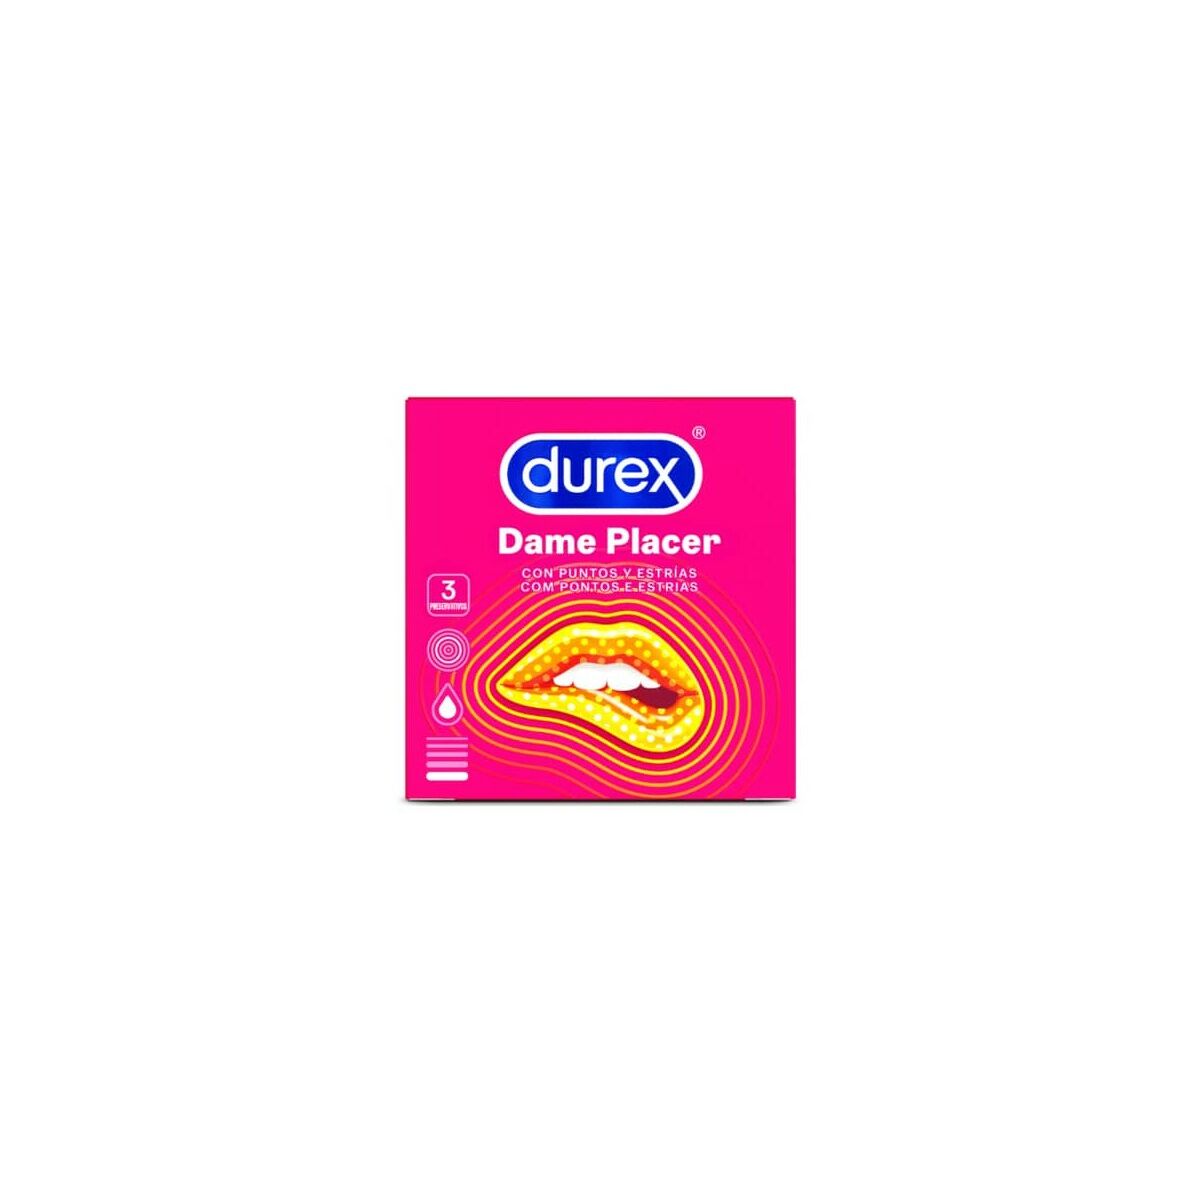 Kondomer Dame Placer Durex 3 uds